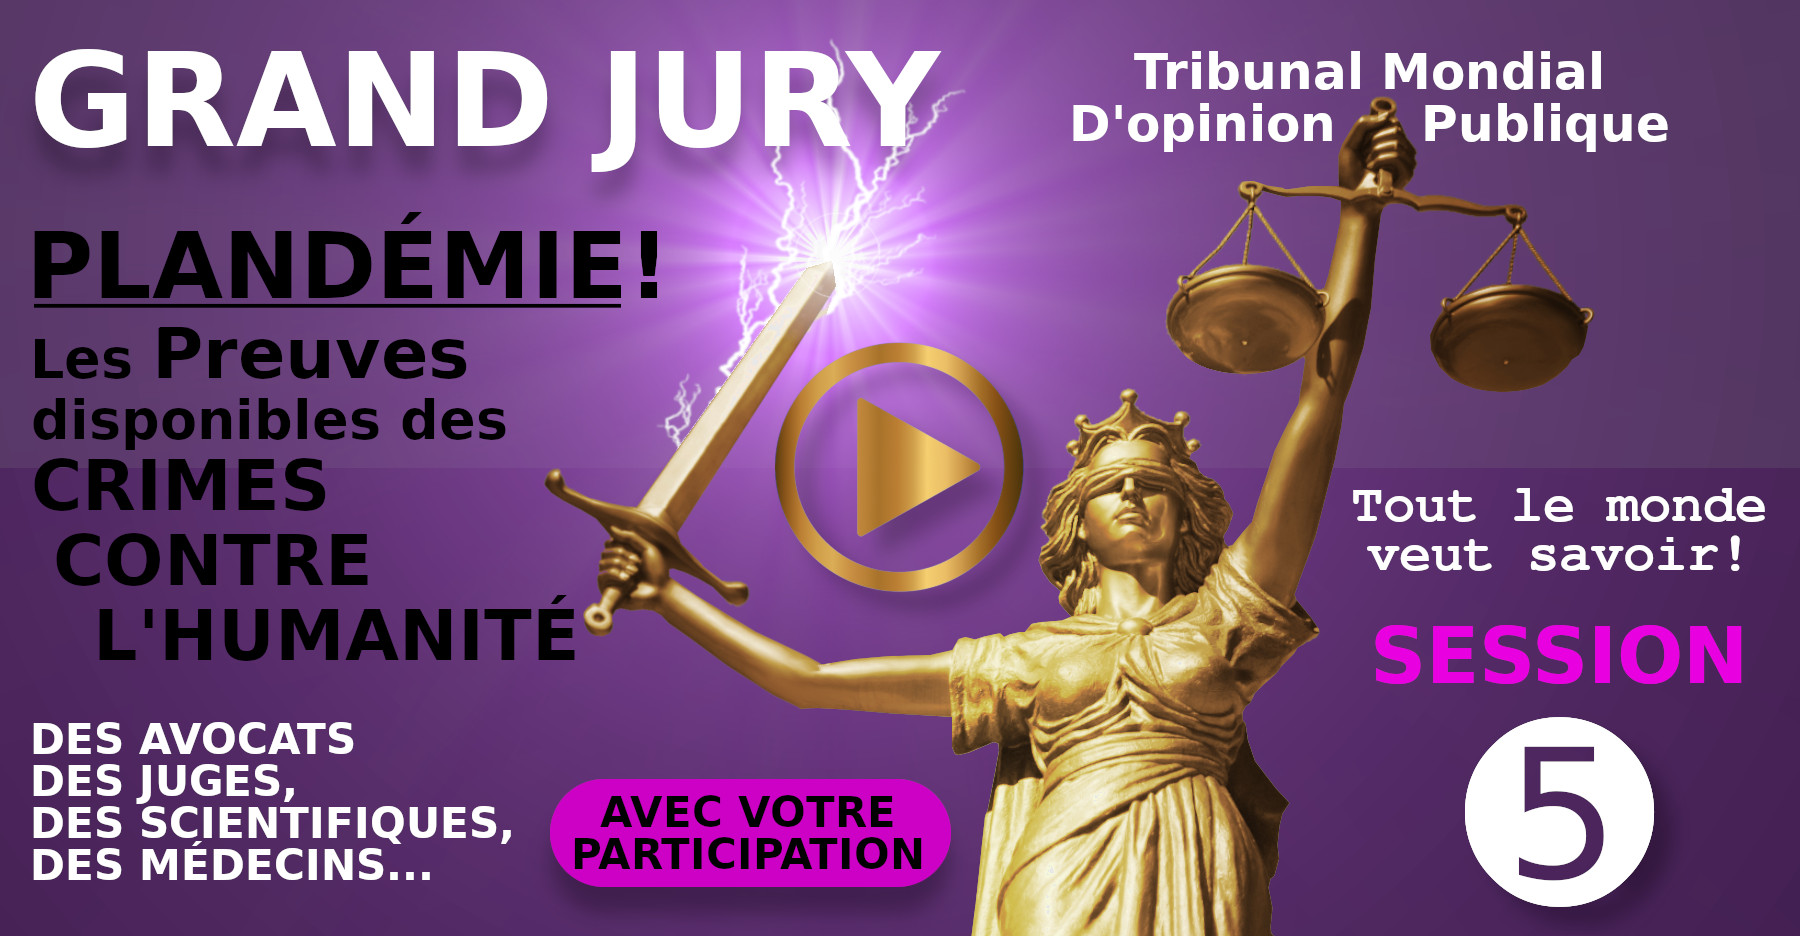 GRAND JURY -5- JUSTICE ENSEMBLE!!